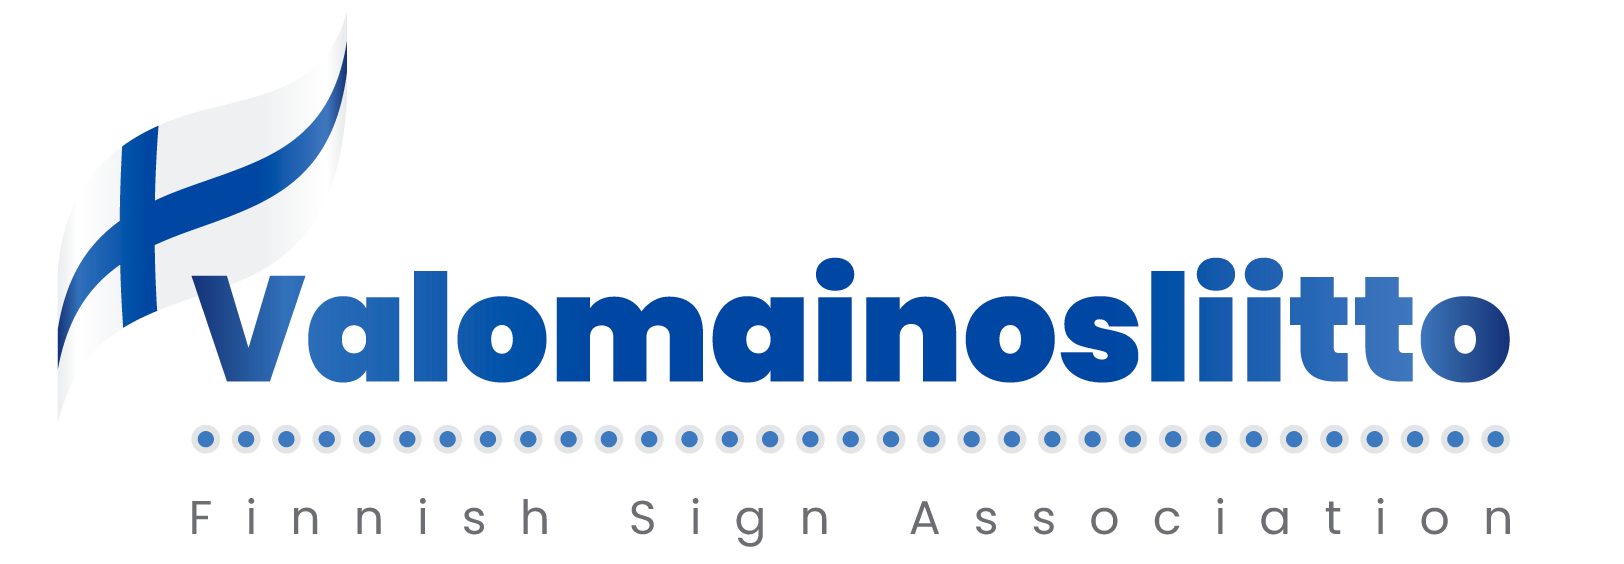 Suomen Valomainosliitto logo